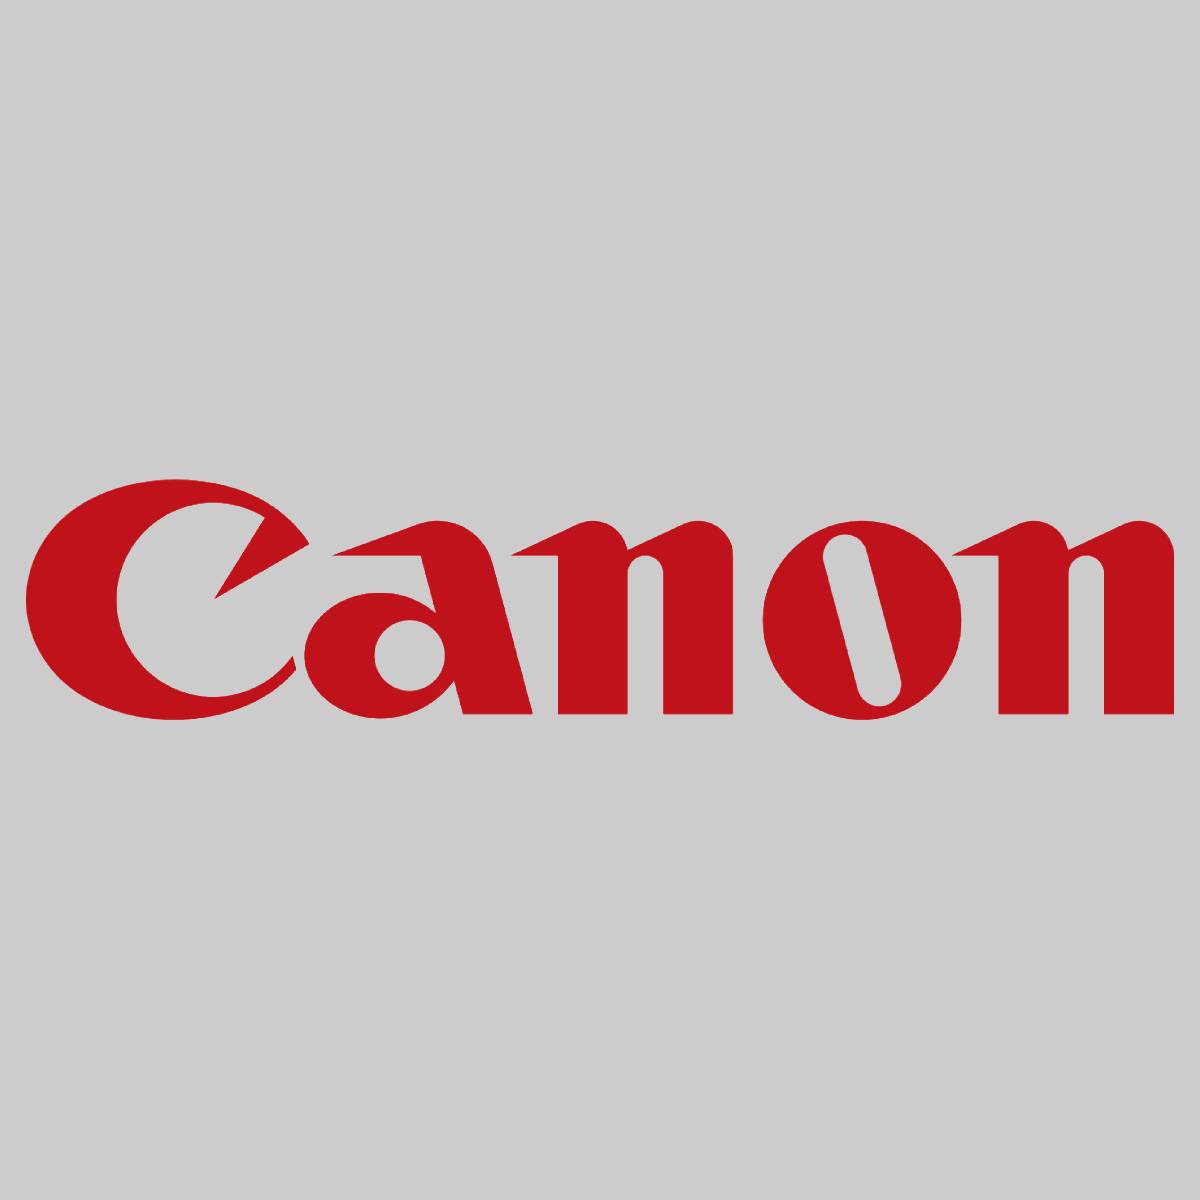 "Original Canon Toner Cyan C-EXV44 6943B002 for ImageRunner C 9200 9270 9280